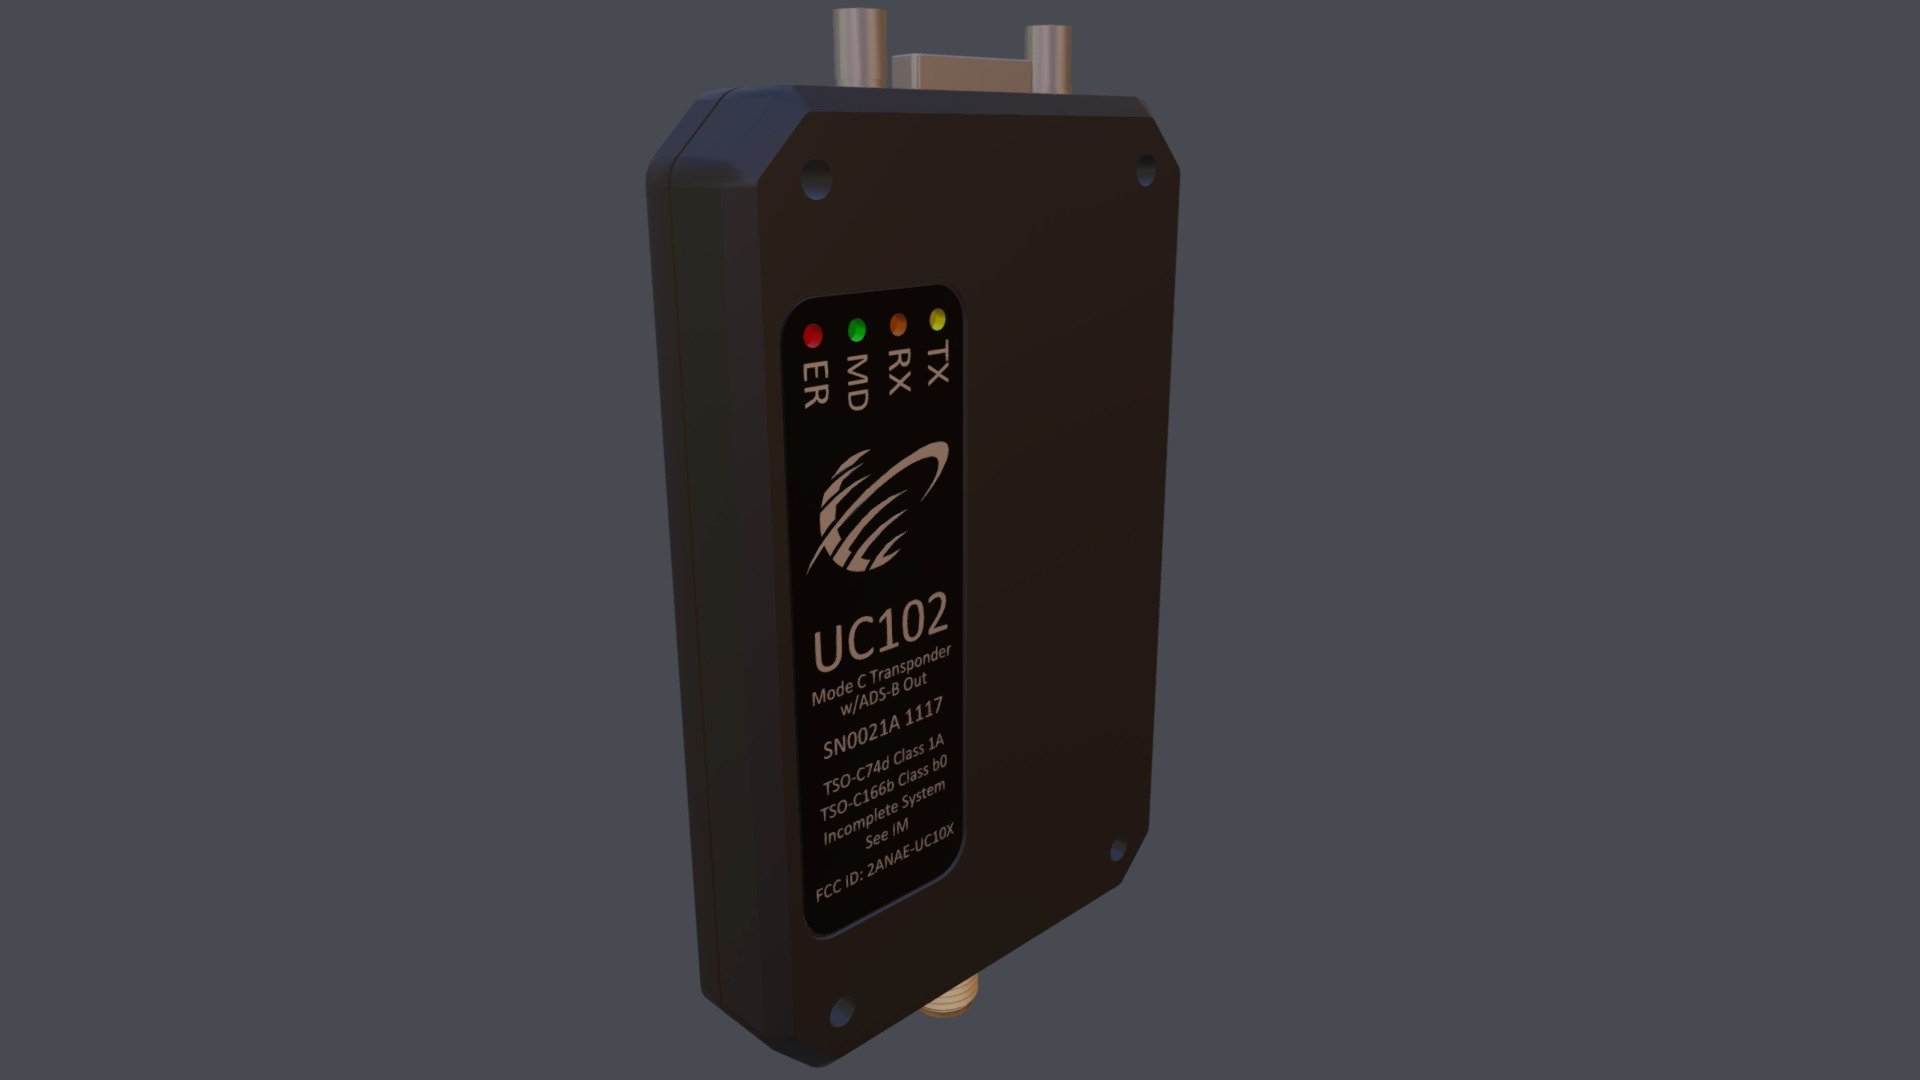 UC102 Mode C Transponder w/ADS-B Out